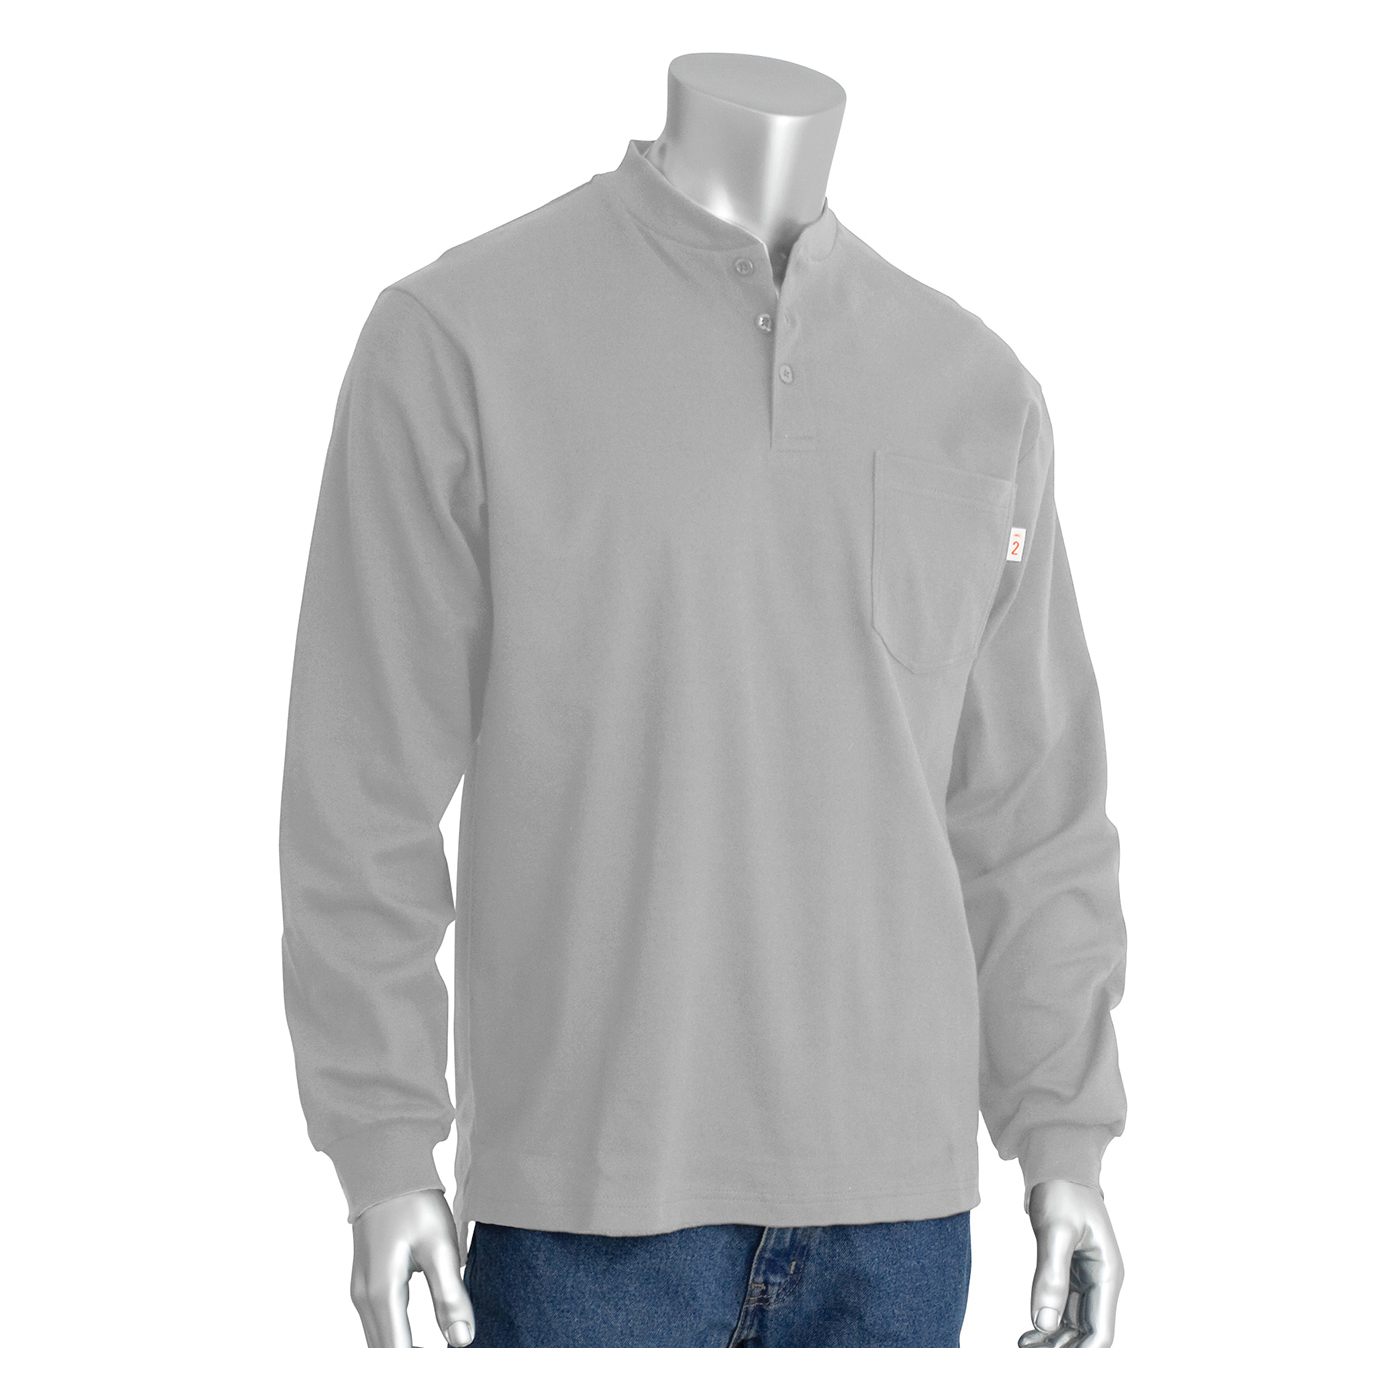 PIP® 385-FRHN-(LG)-3X Arc and Flame-Resistant Long Sleeve Henley Shirt, 3XL, Light Gray, Cotton Interlock Knit, 35 in L